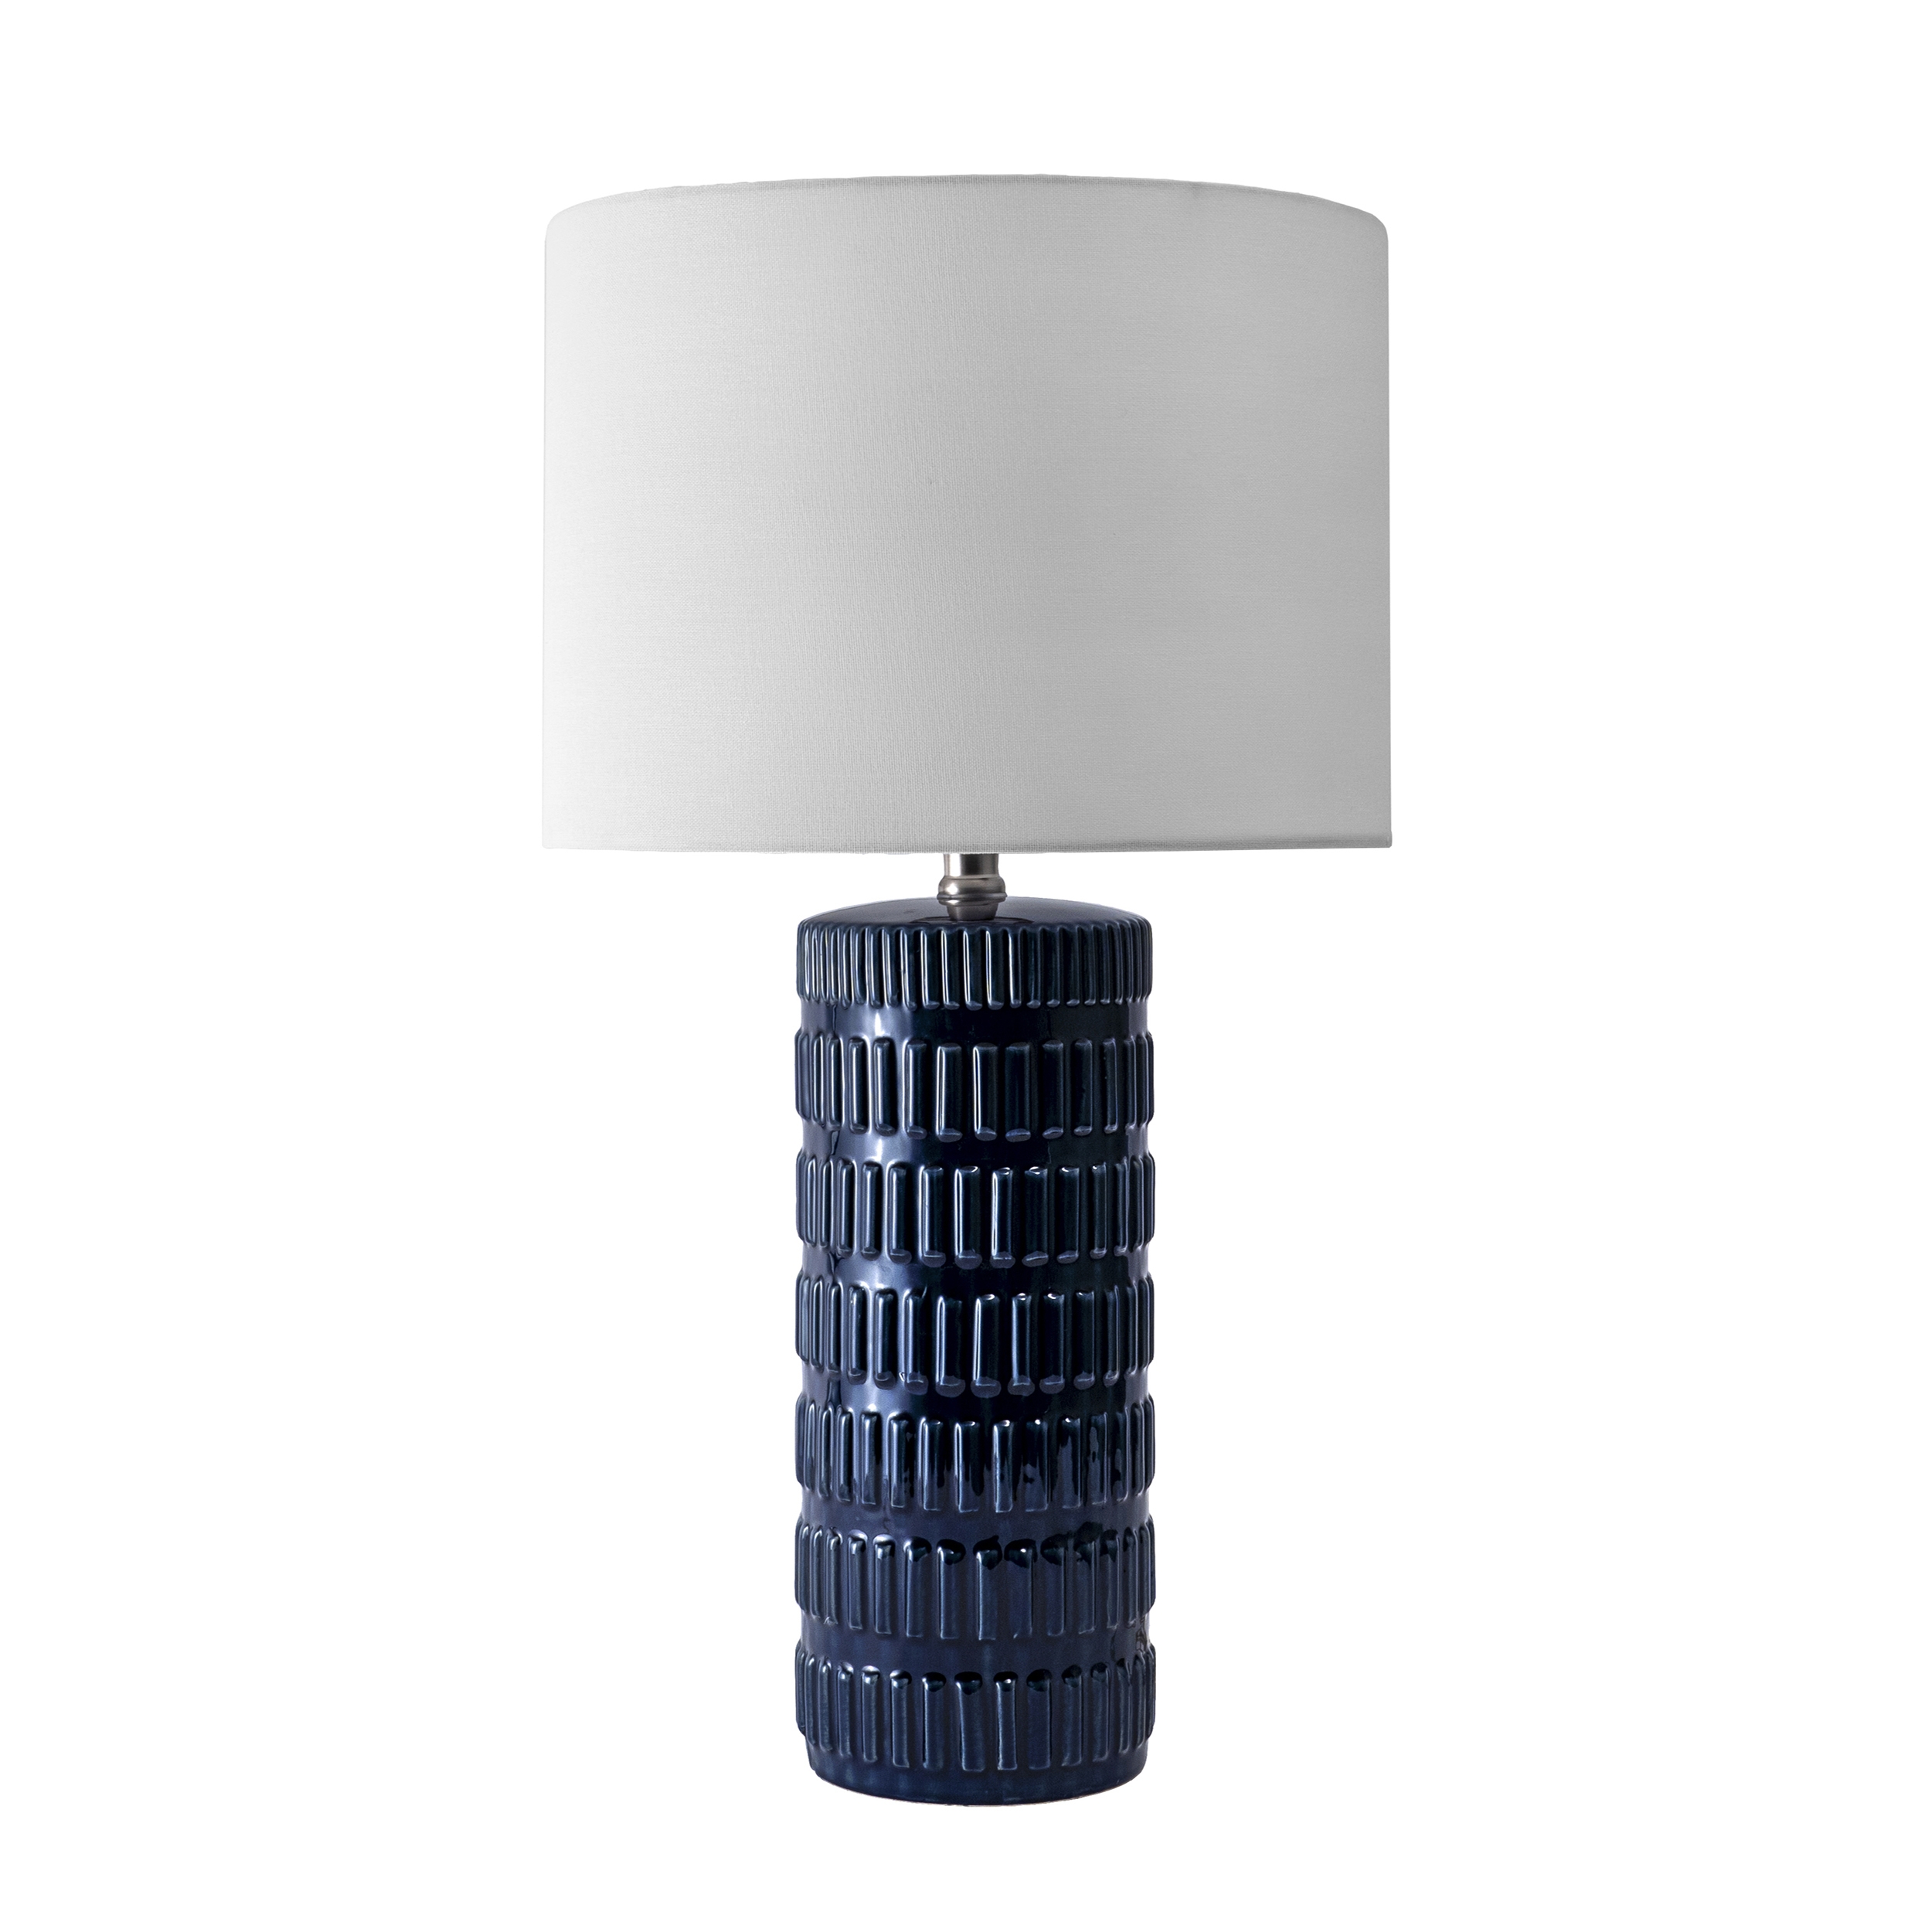 Franklin Ceramic Table Lamp, Blue - Image 0